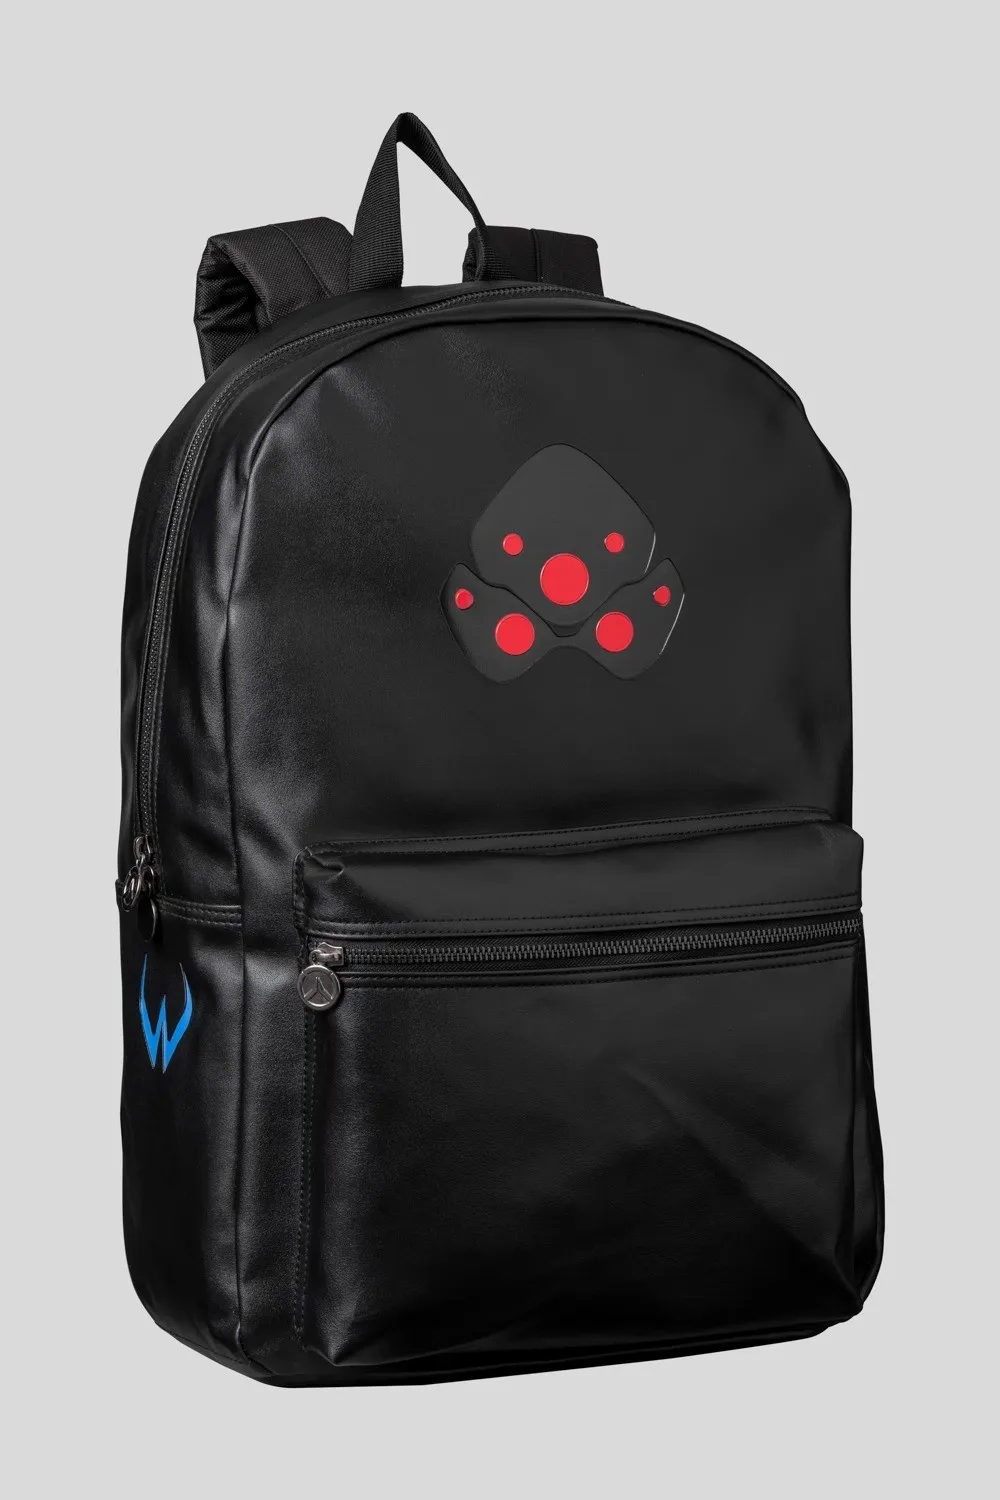 

Game Overwatch Backpack Widowmaker JunkRat Cosplay Laptop Shoulder Bag Men Women Fashion Big Space School Bag